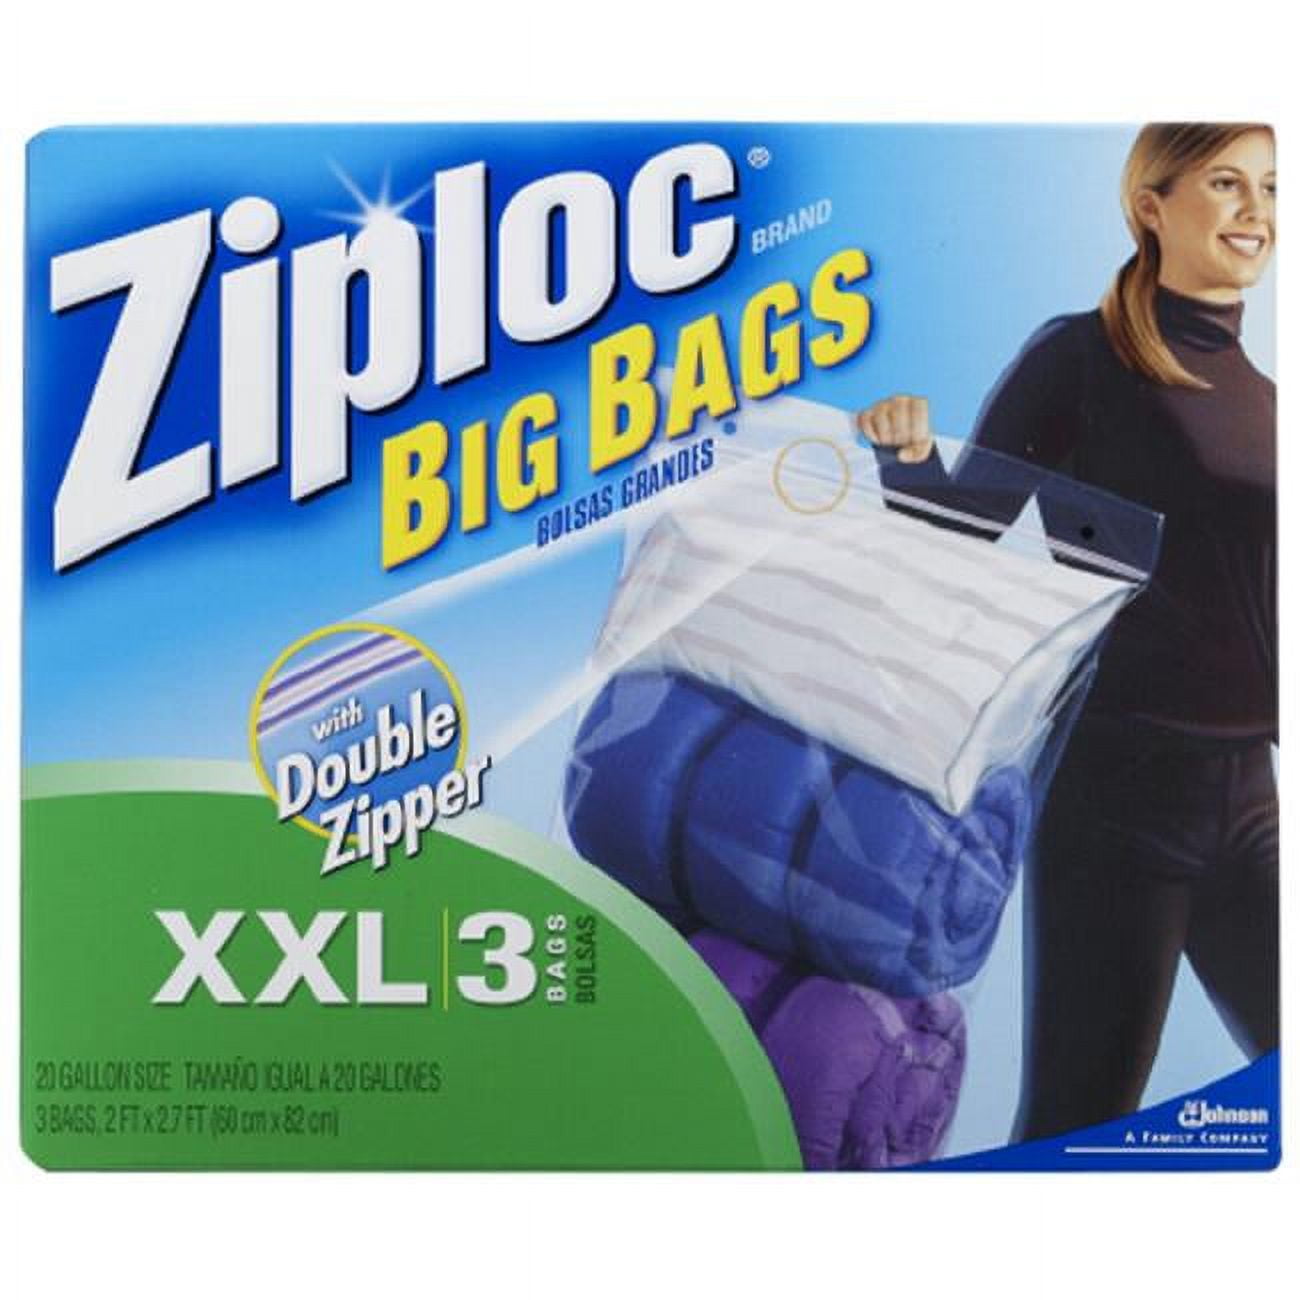 SC Johnson Ziploc® Double Zipper Storage Bags, 1 gal, 1.75 mil, 10.56 x  10.75, Clear, 250/Box, SJN682257